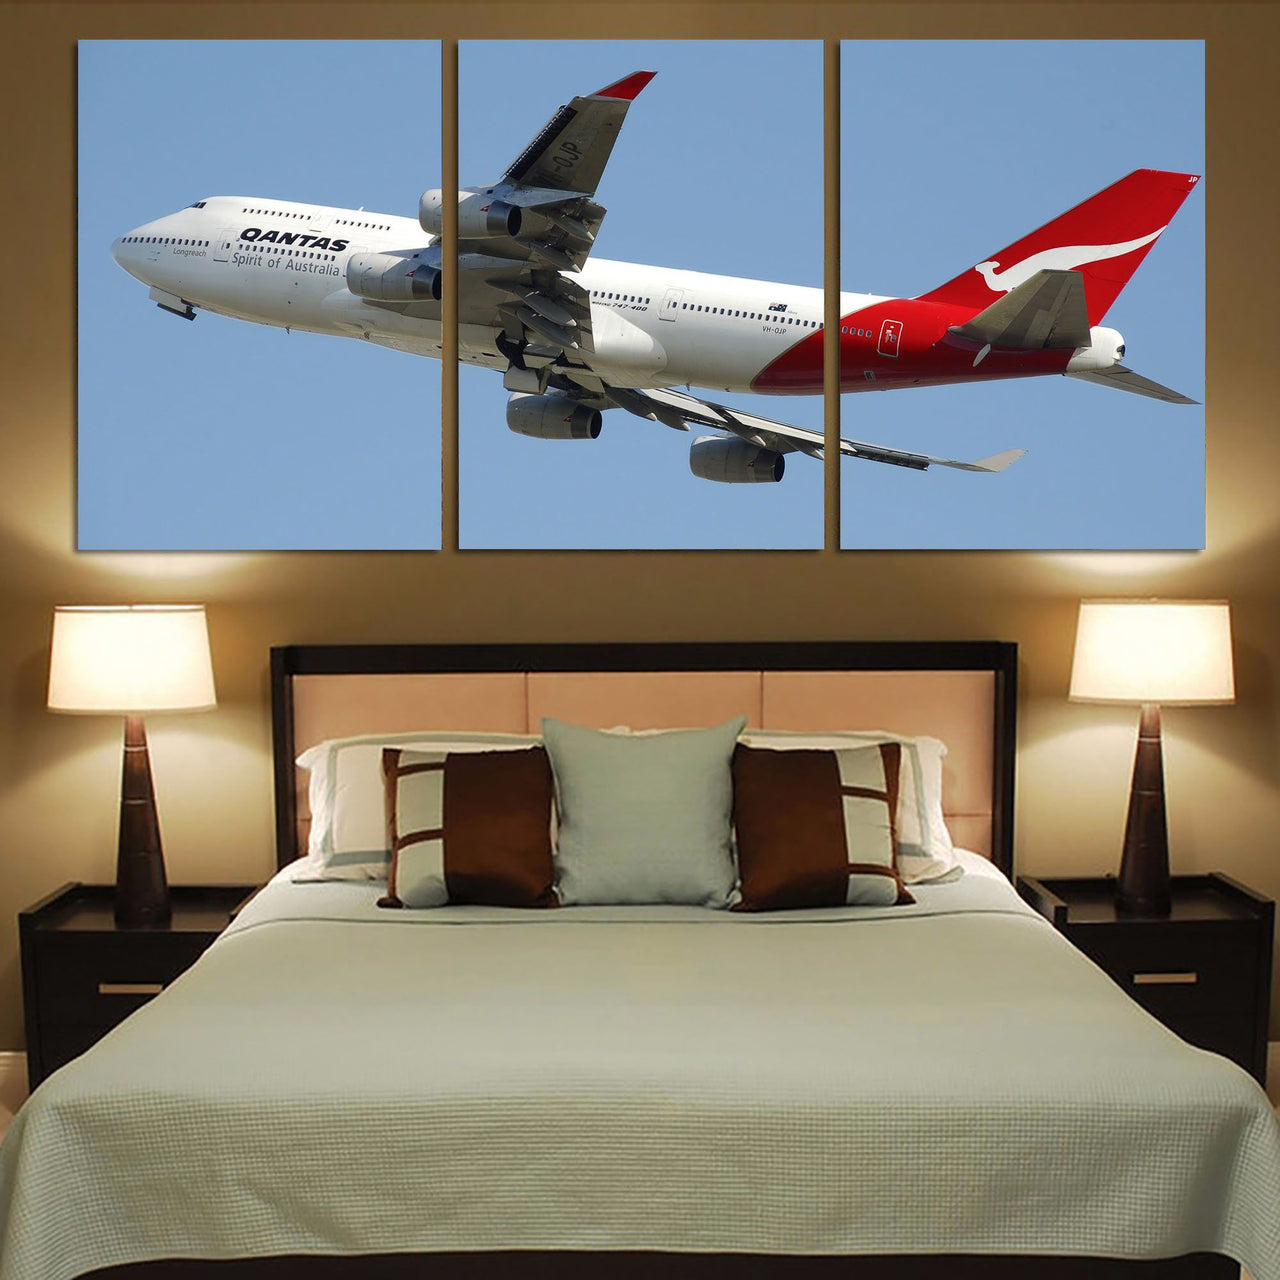 Departing Qantas Boeing 747 Printed Canvas Posters (3 Pieces) Aviation Shop 